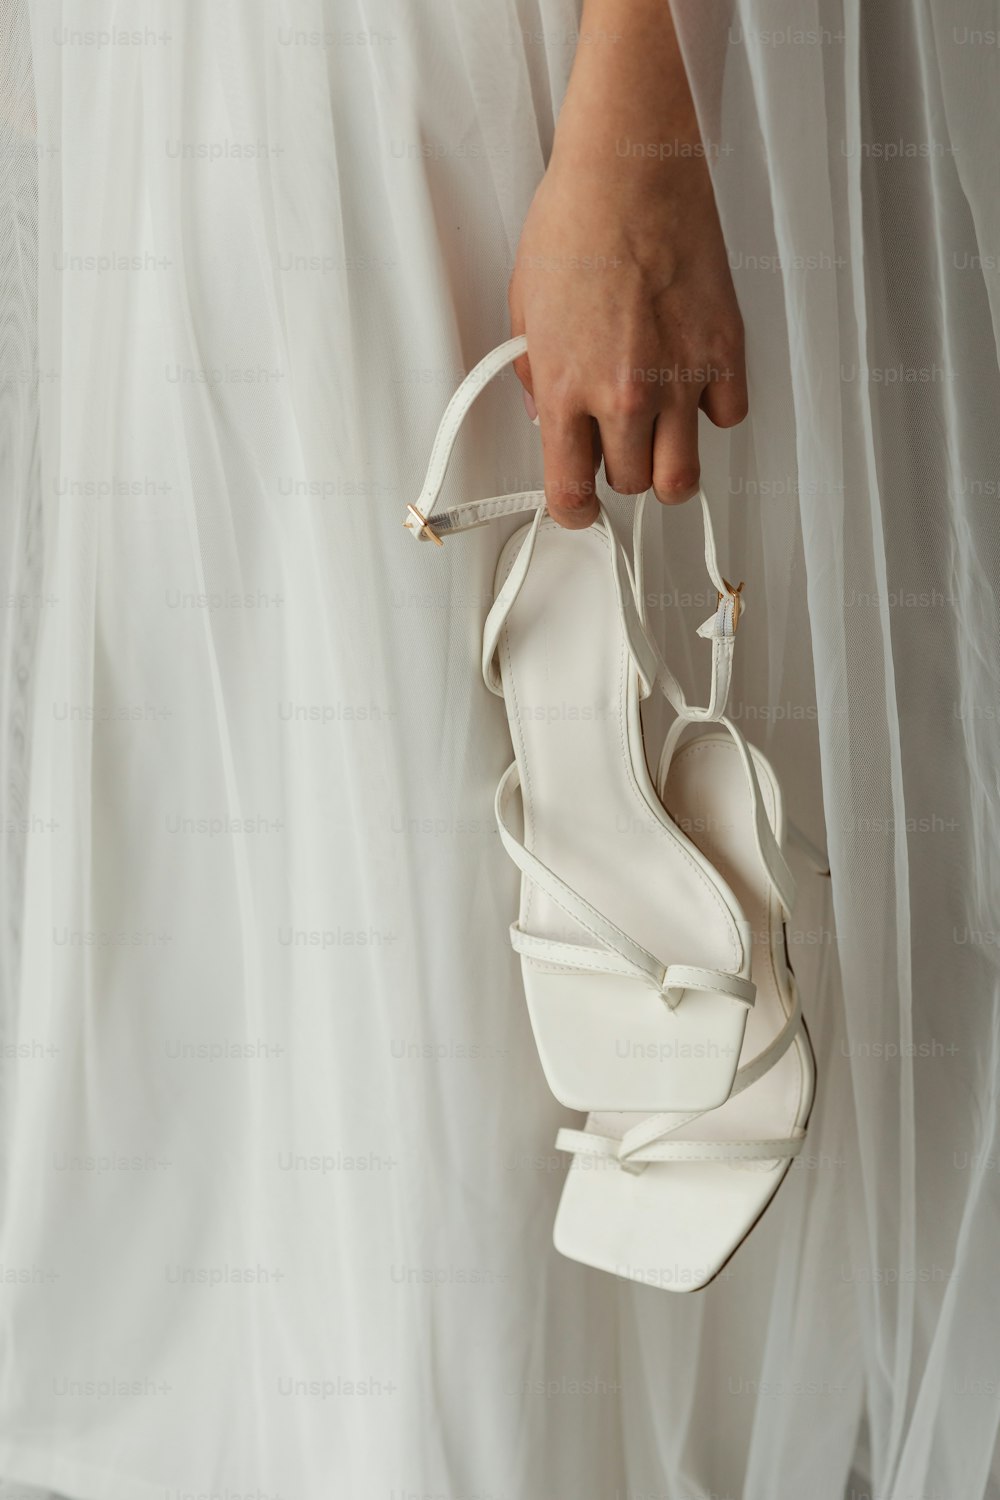 Una mujer con un vestido blanco sosteniendo un zapato blanco